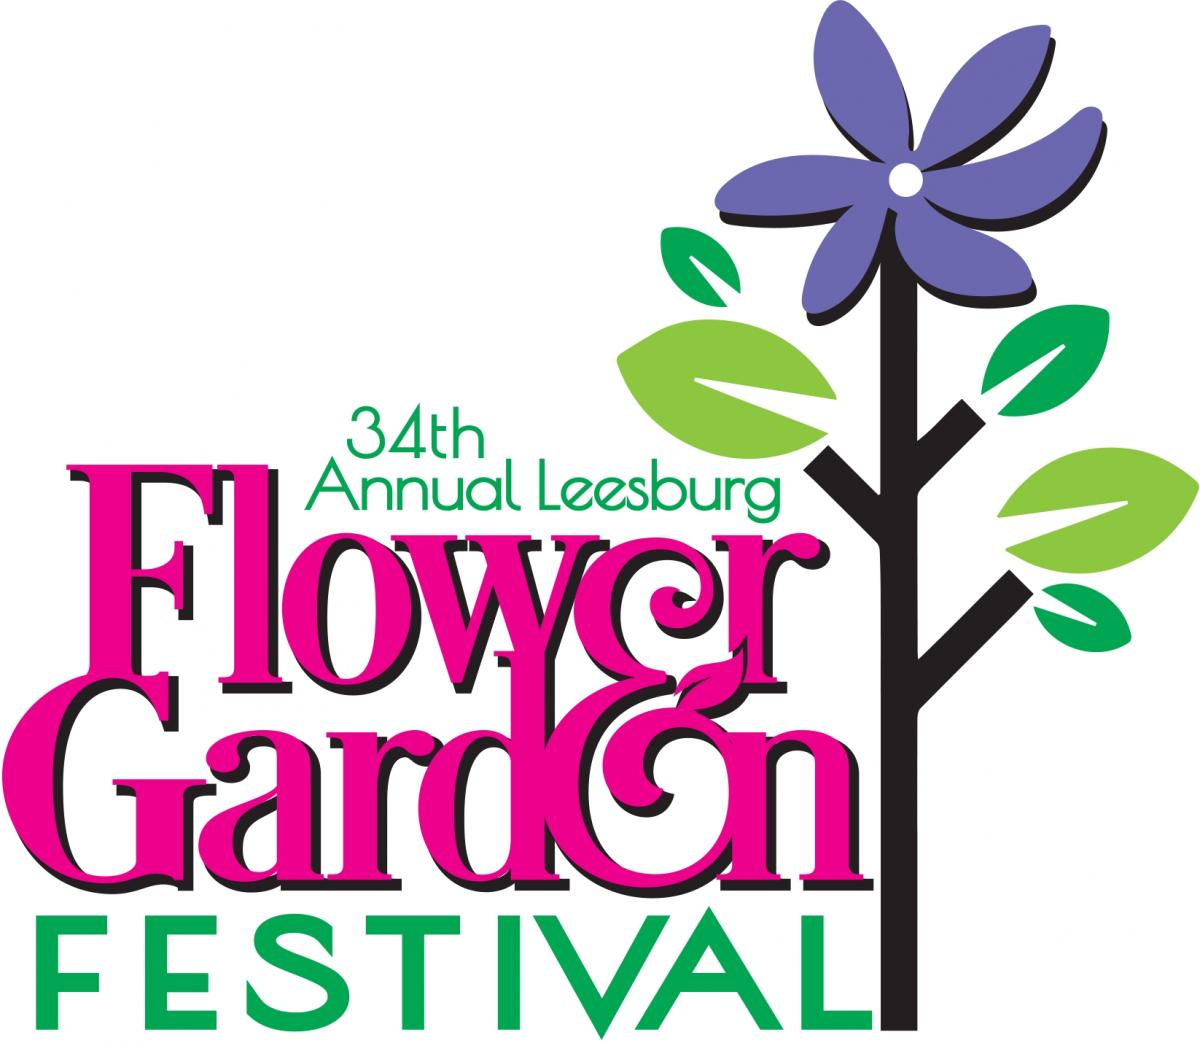 34th Annual Leesburg Flower and Garden Festival